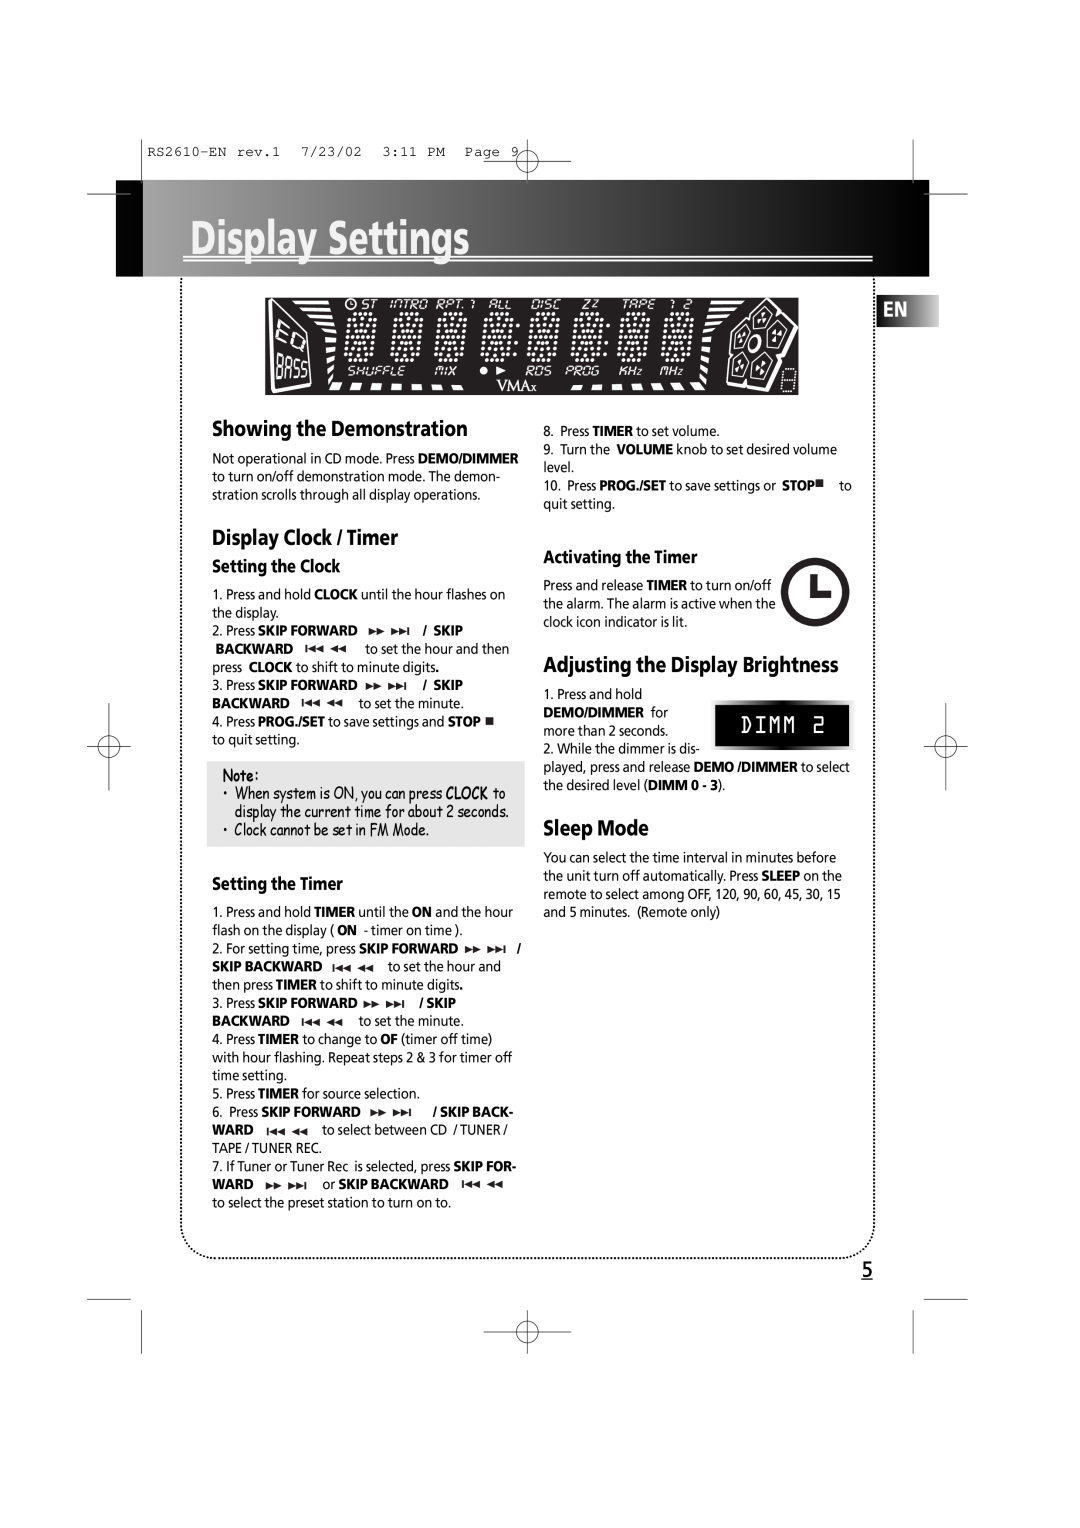 RCA RS2610 manual Display Settings, Showing the Demonstration, Display Clock / Timer, Adjusting the Display Brightness 